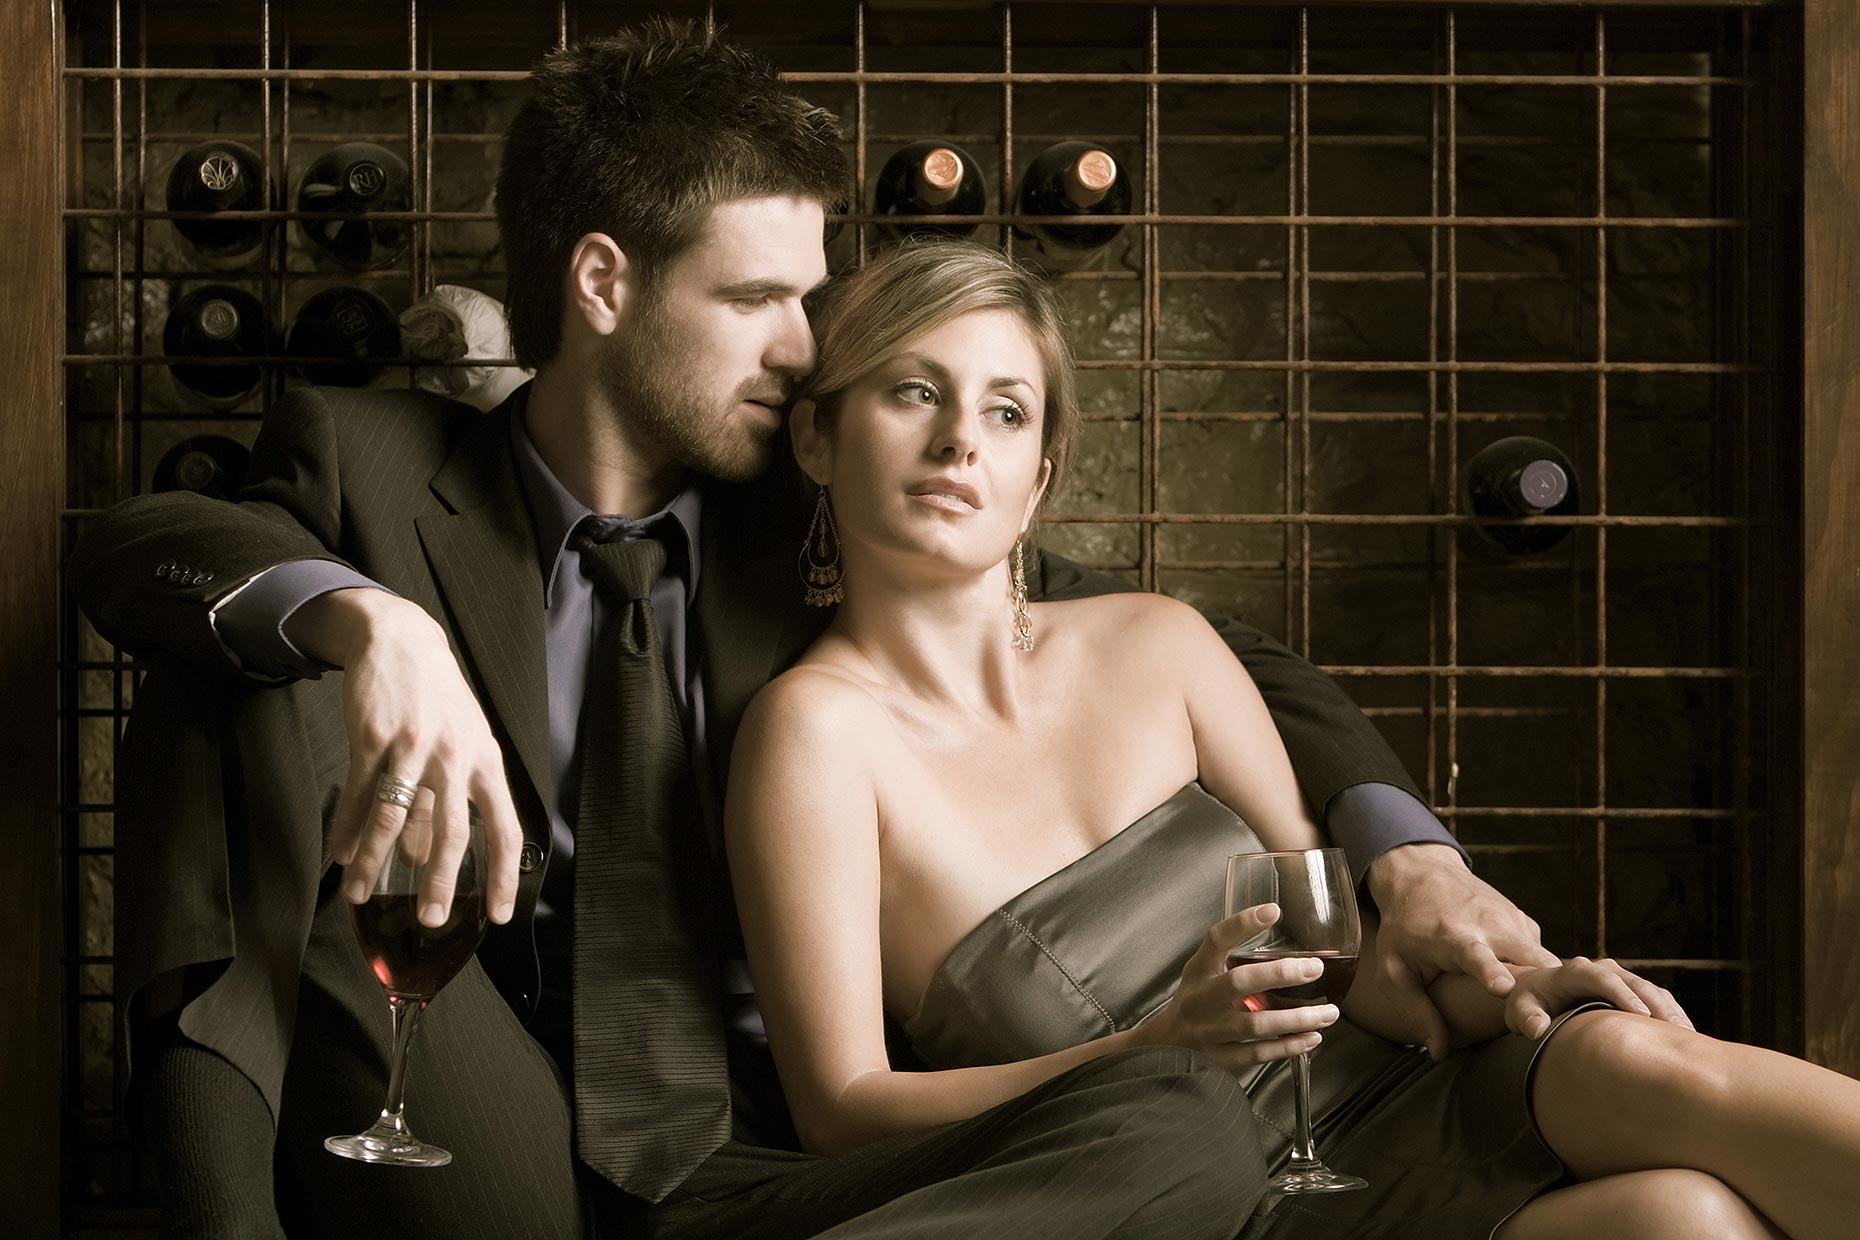 Соблазняют жену видео. Мужчина и женщина. Мужчина напротив женщины. Мужчина и женщина пьют вино. Соблазнение.